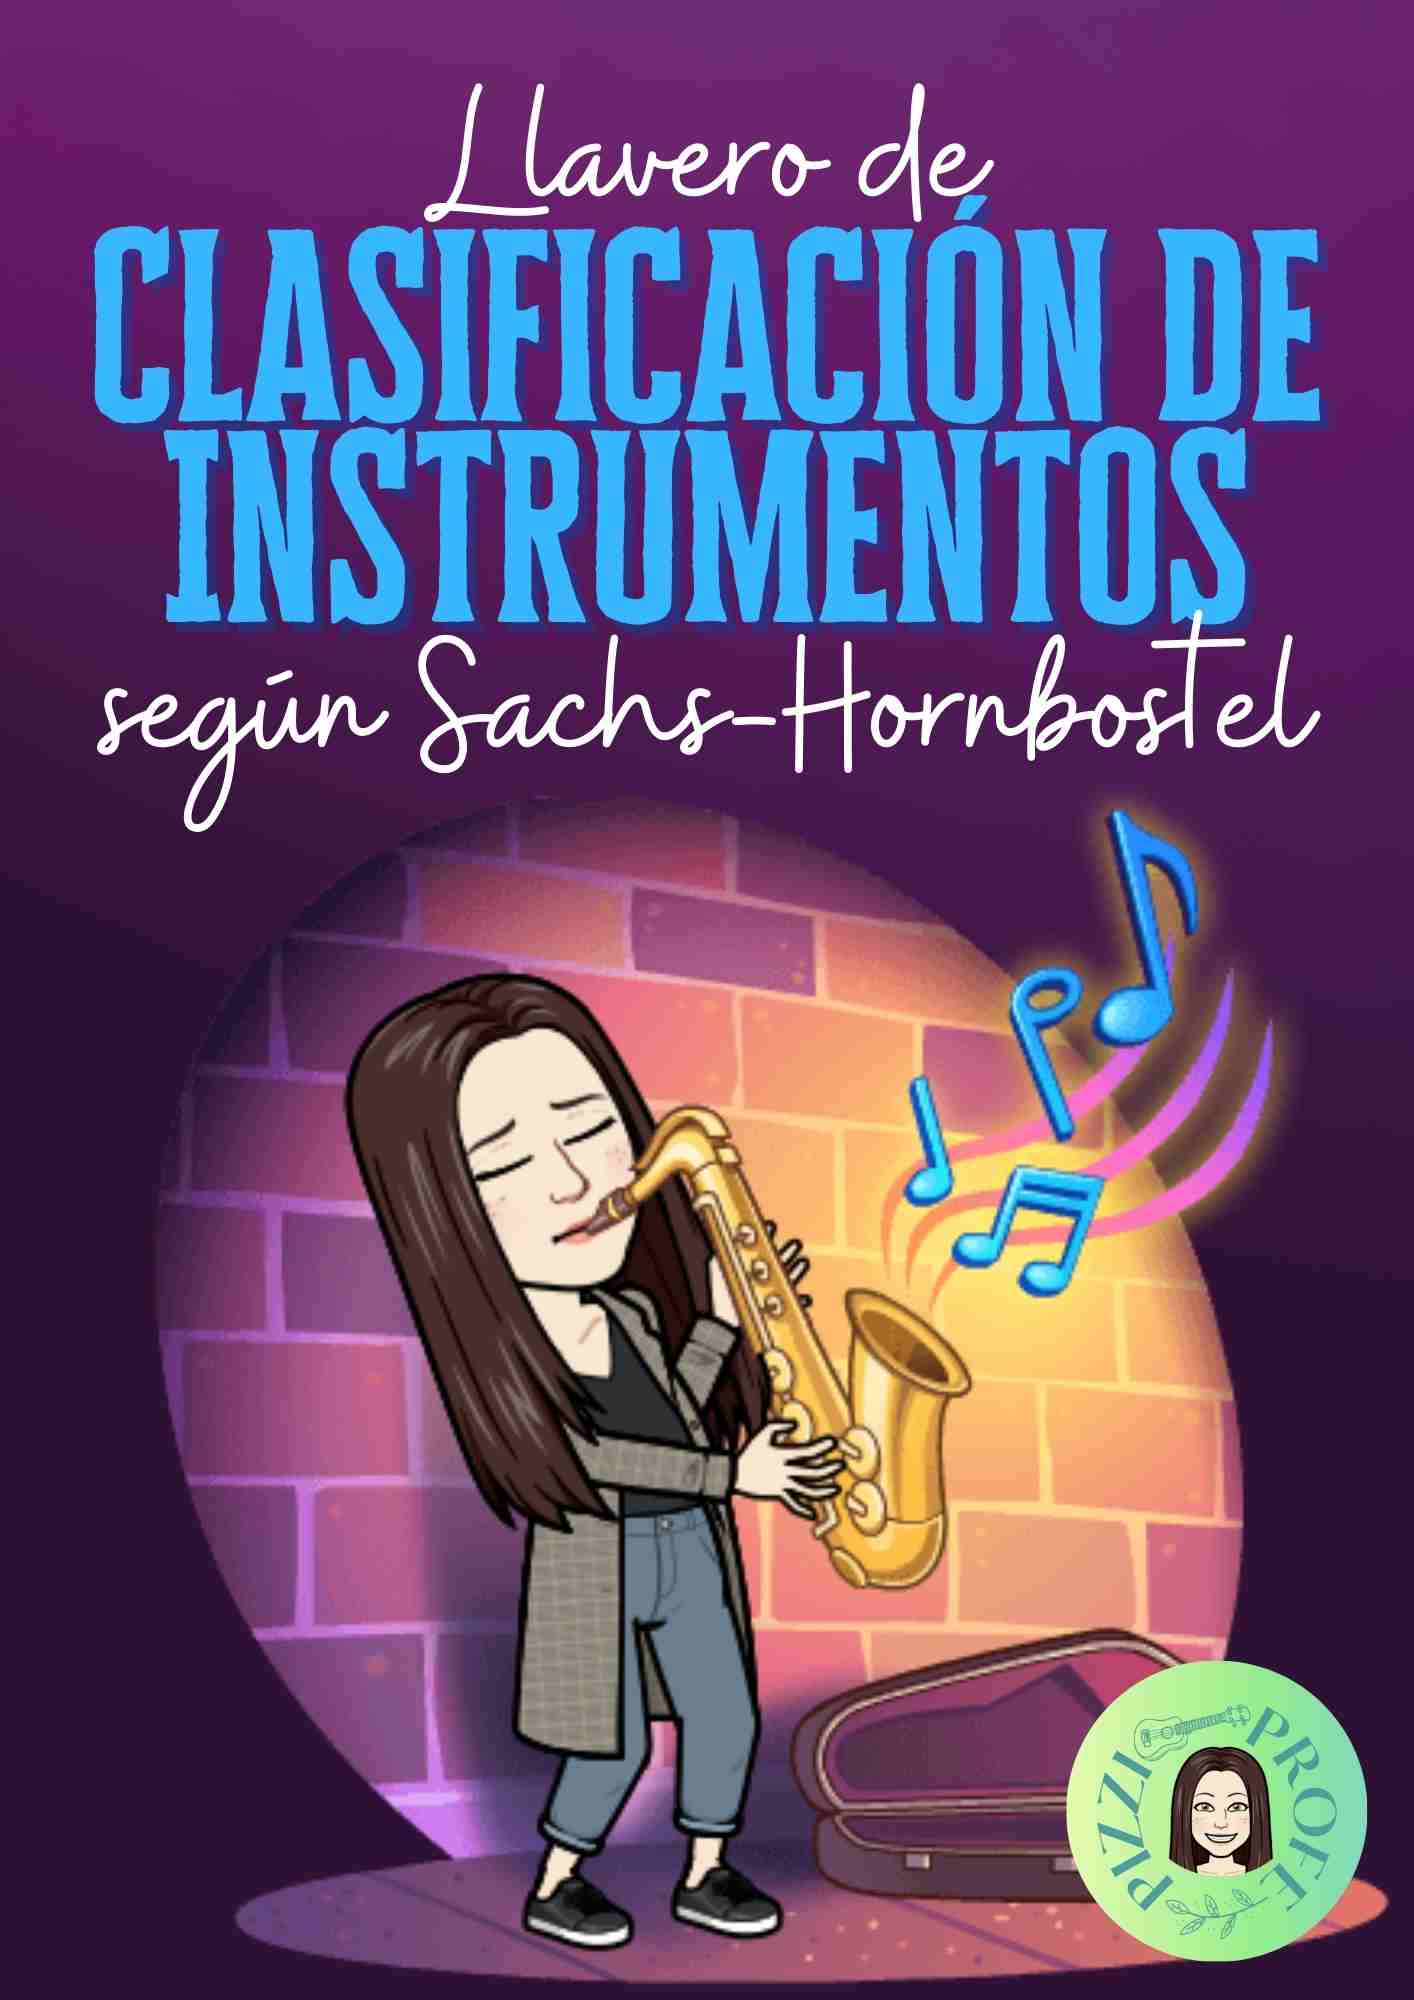 Llavero "Familias de instrumentos Sachs-Hornbostel" by @pizziprofe